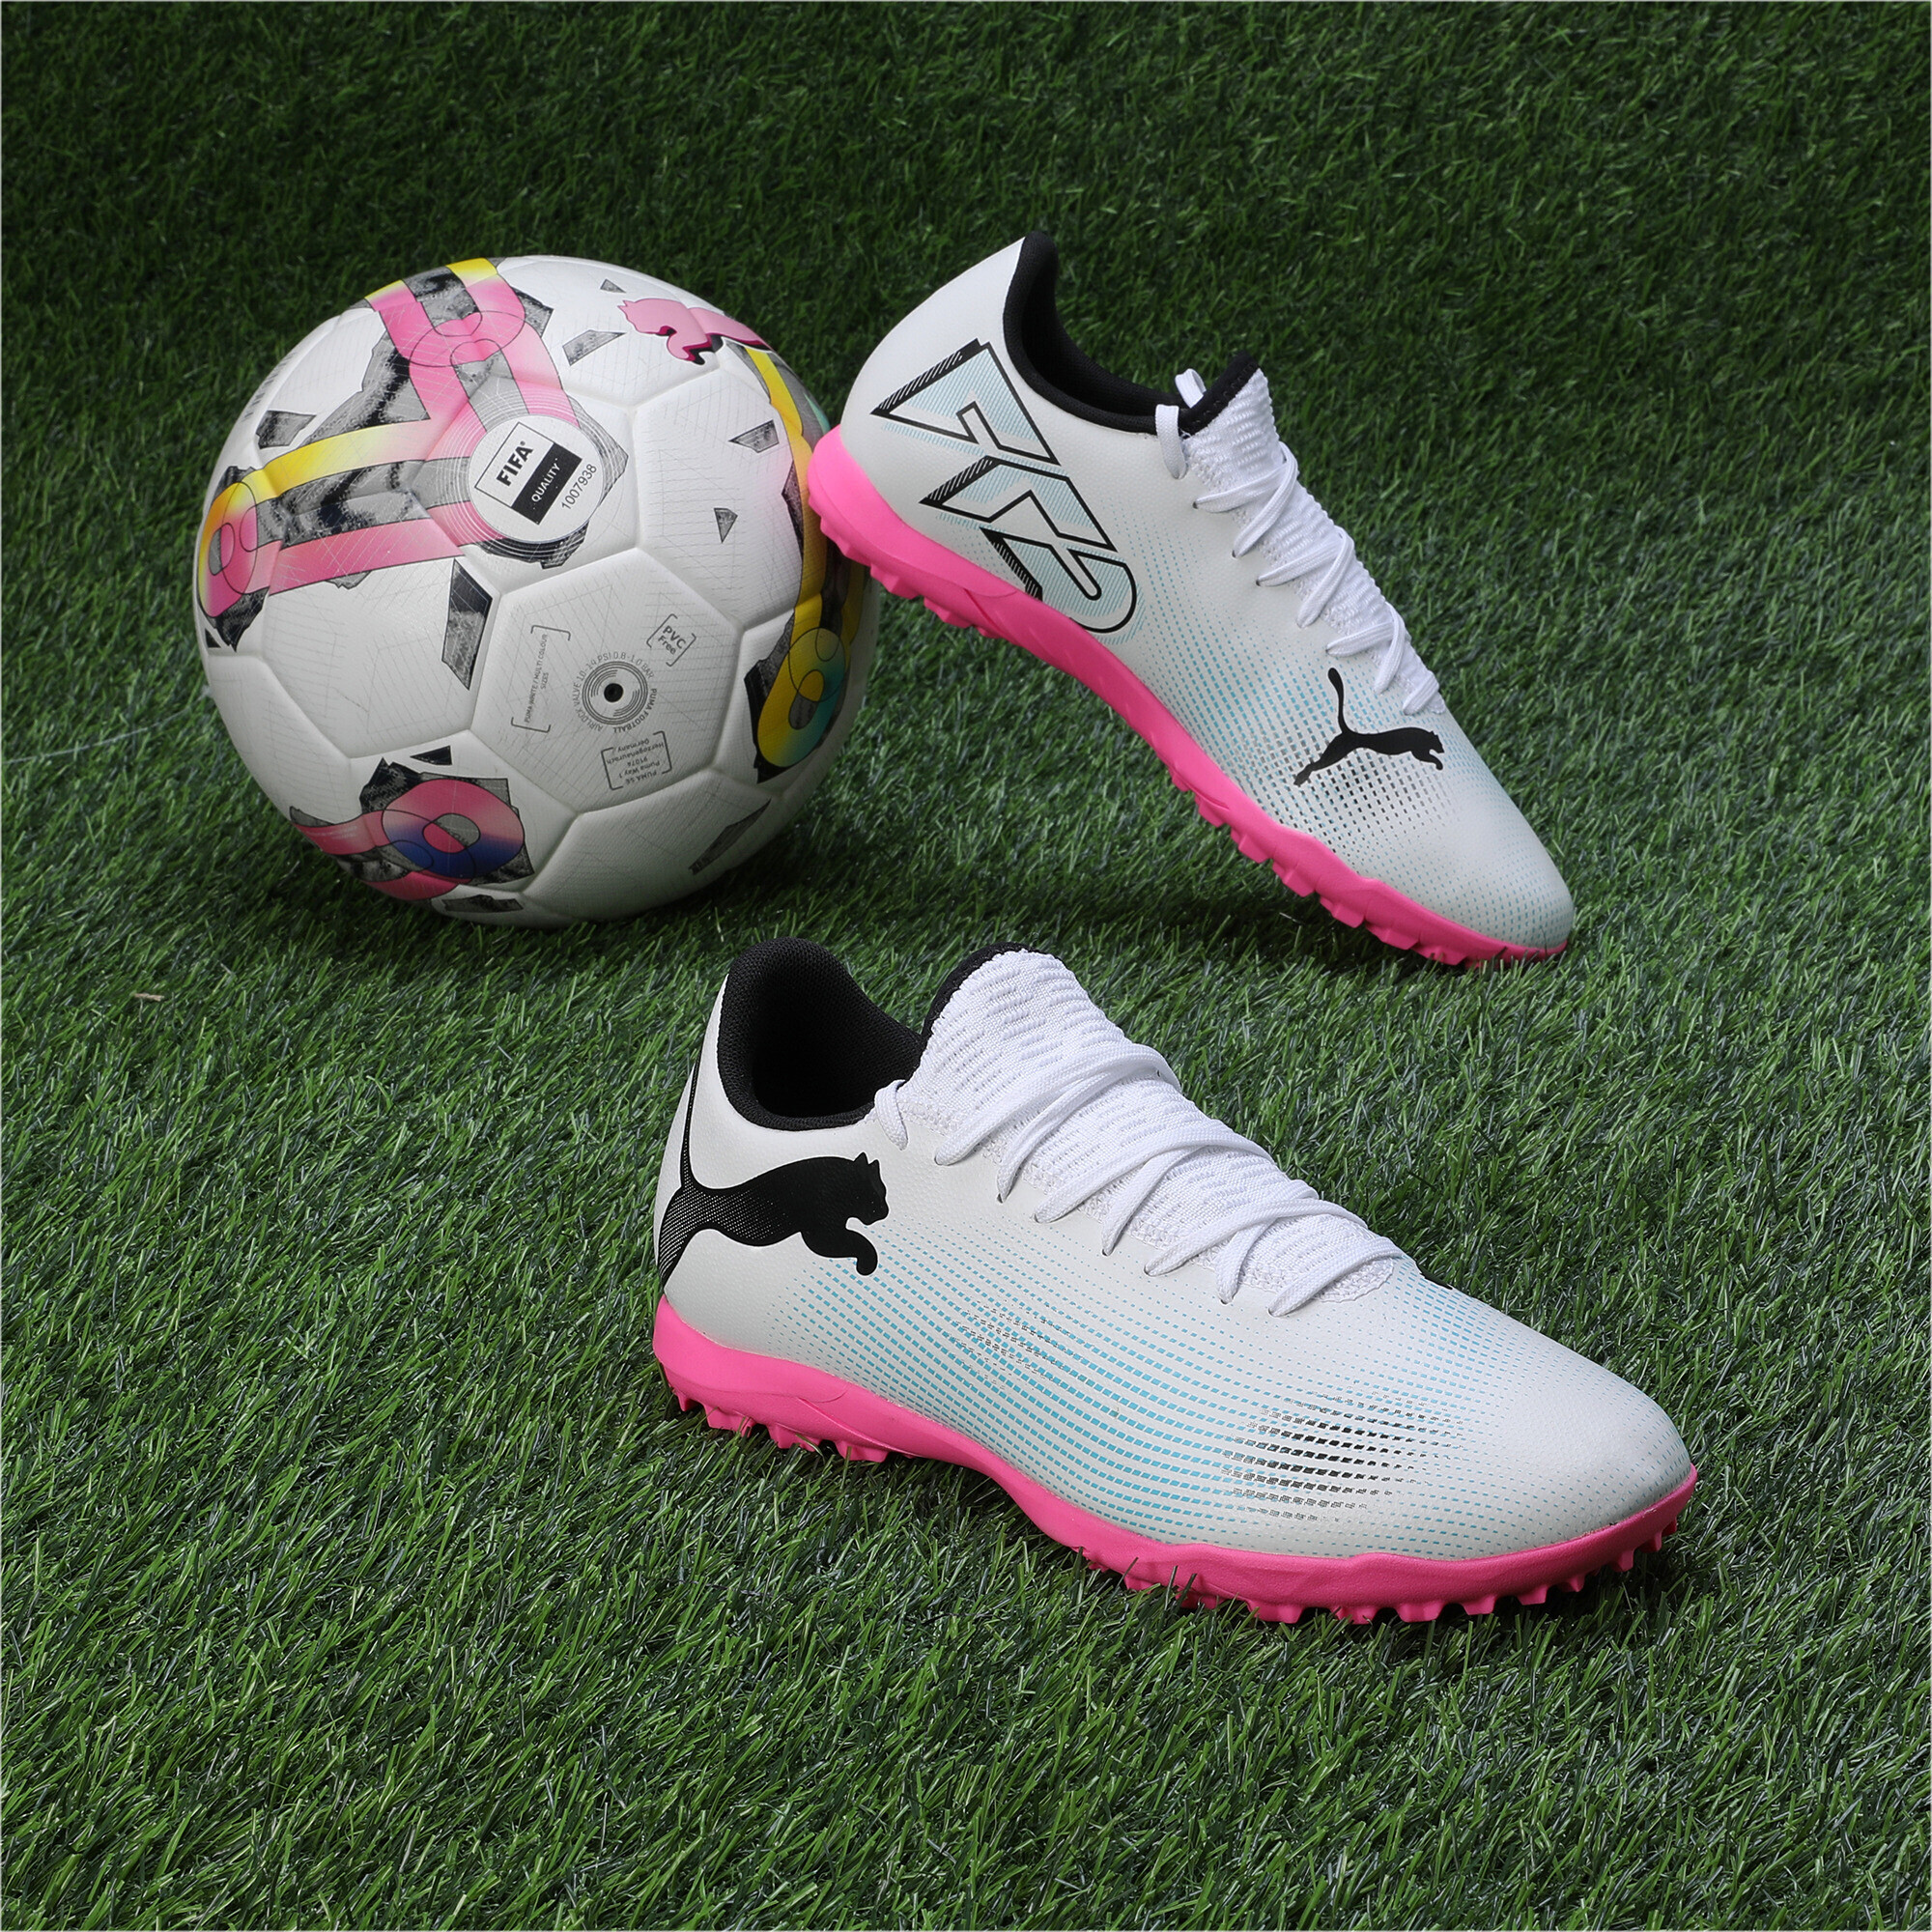 Men's PUMA FUTURE 7 PLAY TT Football Boots In White/Pink, Size EU 41